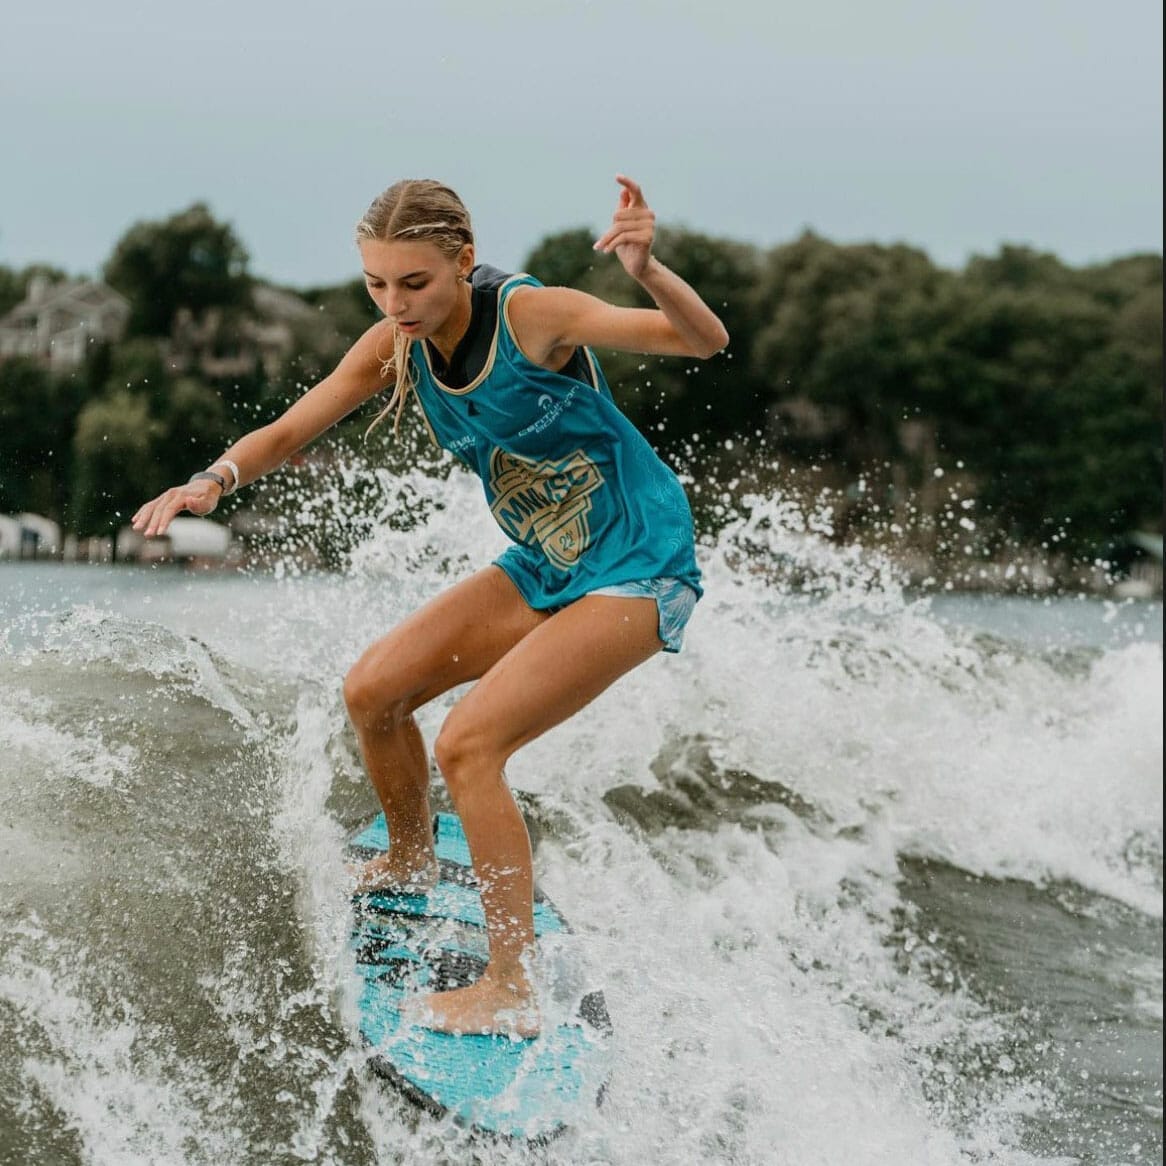 A girl riding a wave on a wakesurf board.